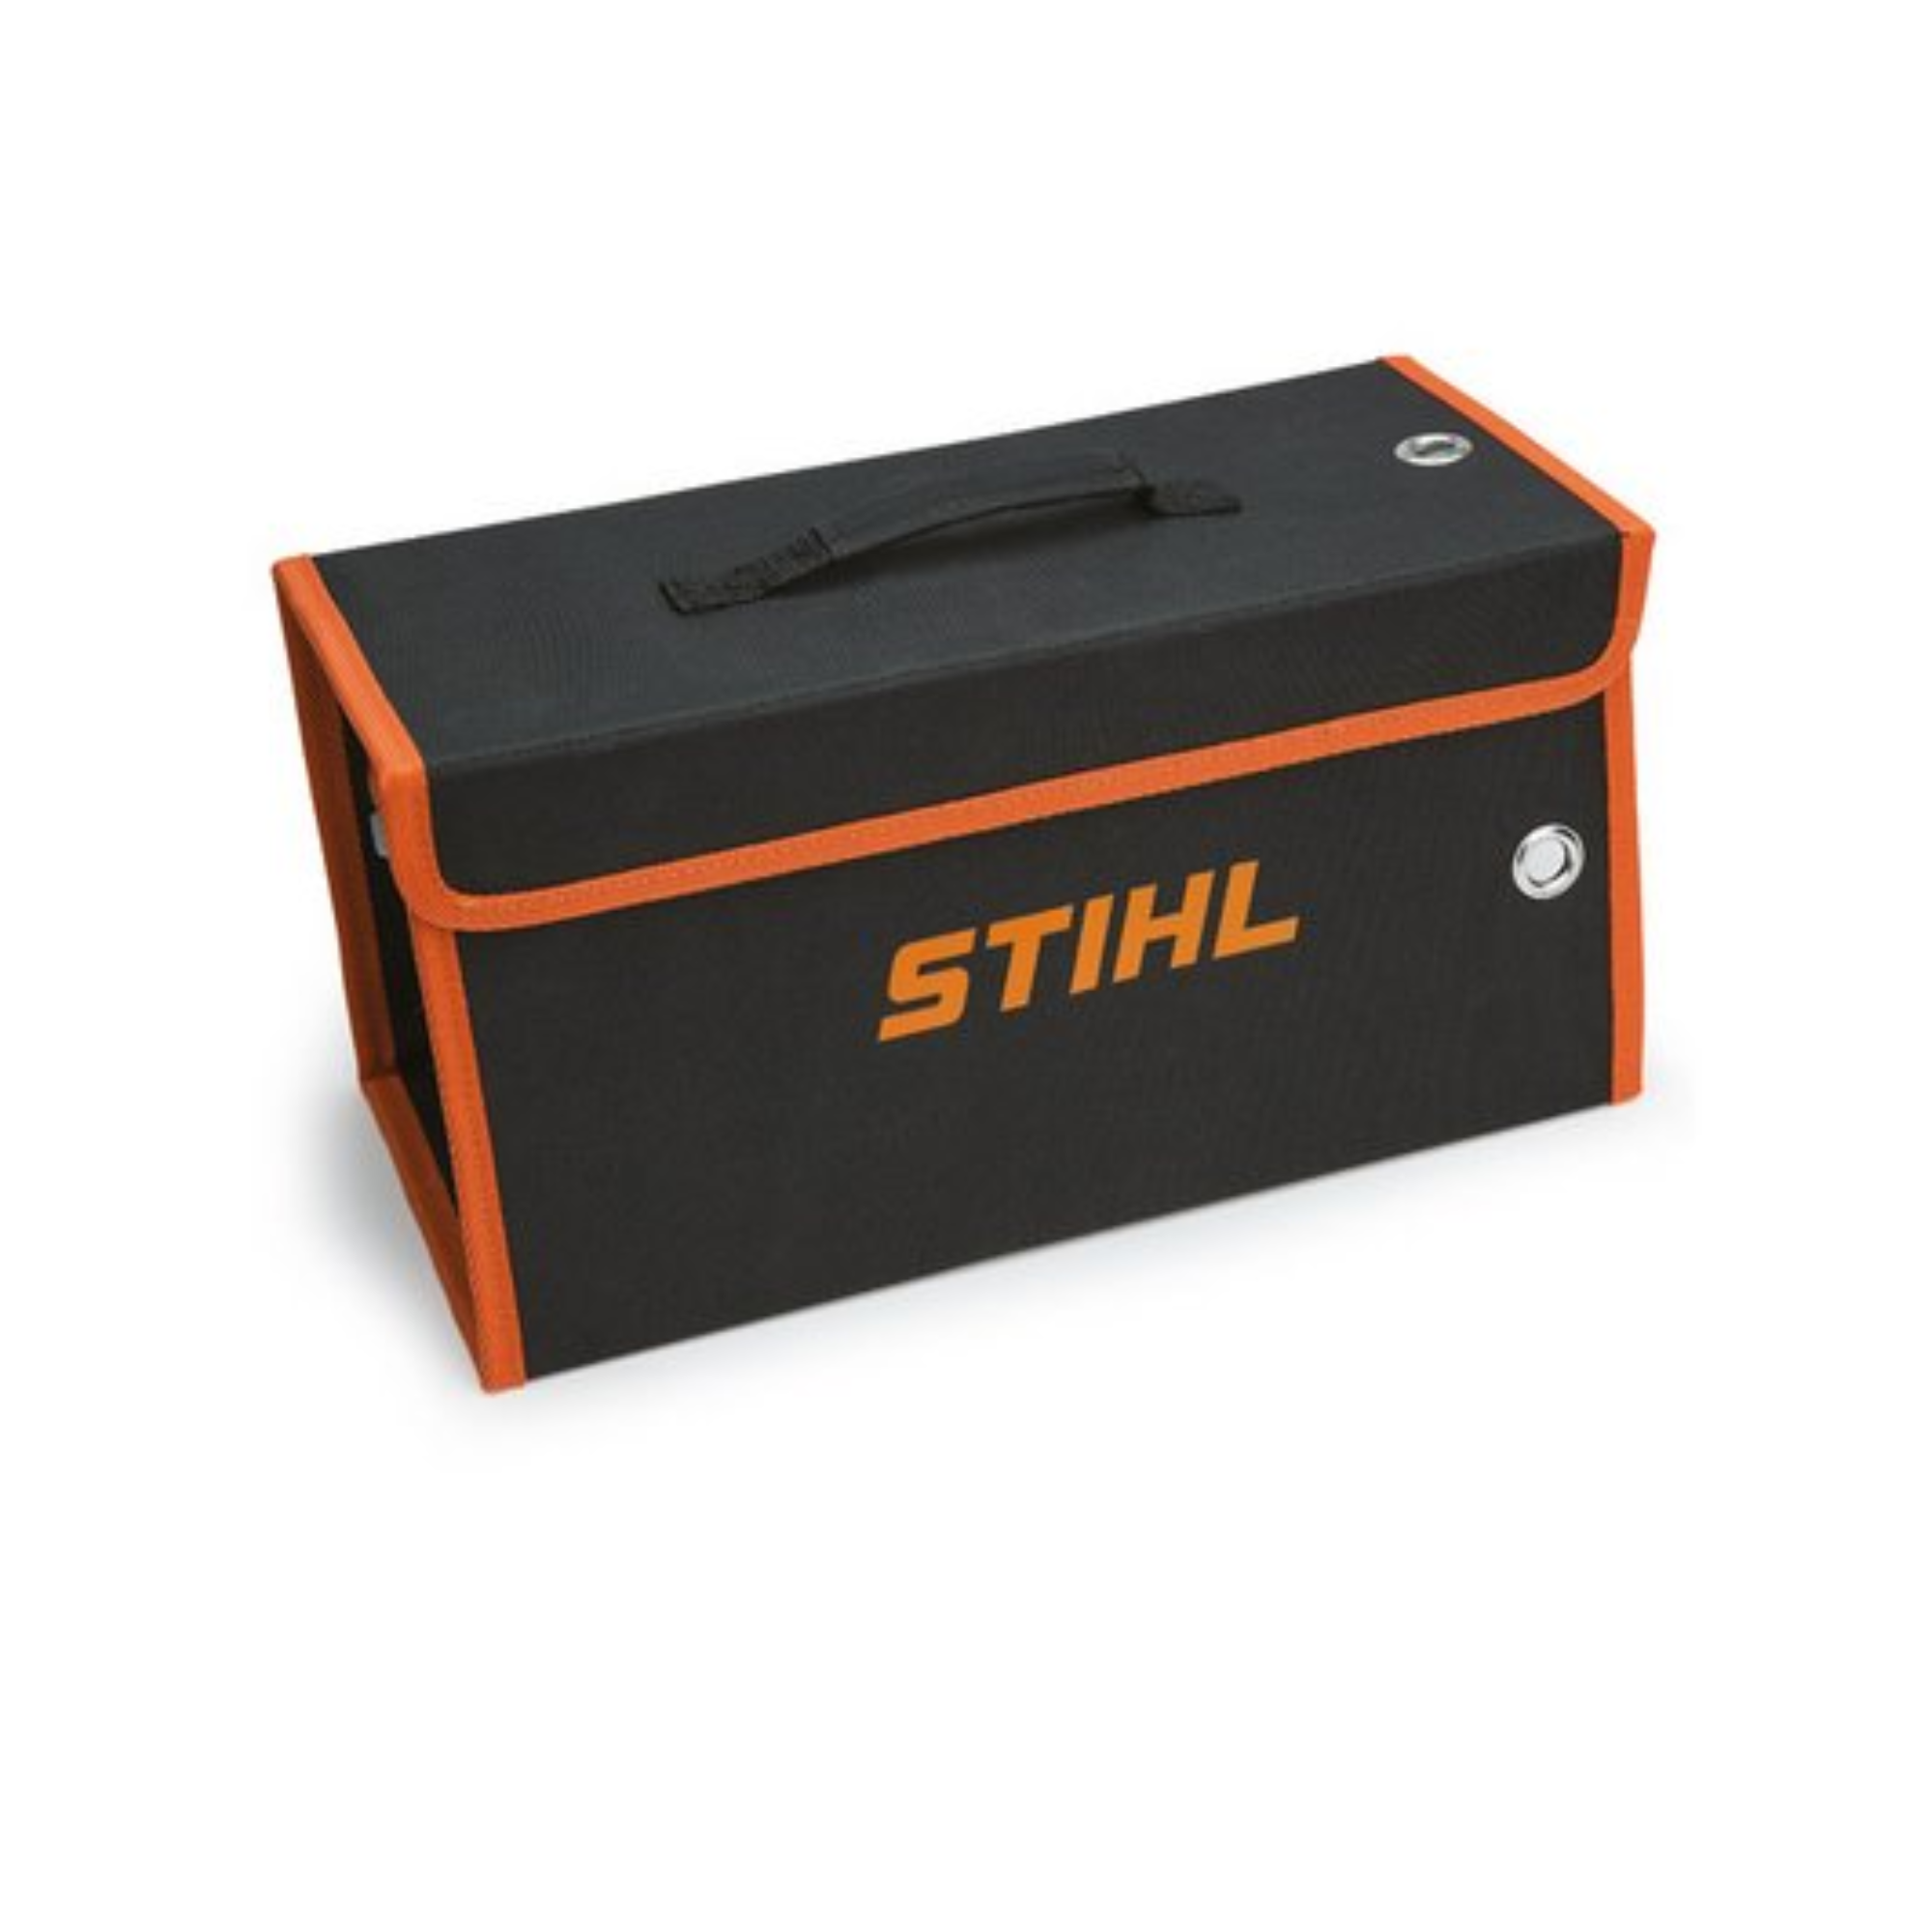 STIHL GTA 26 Battery Powered Garden Pruner